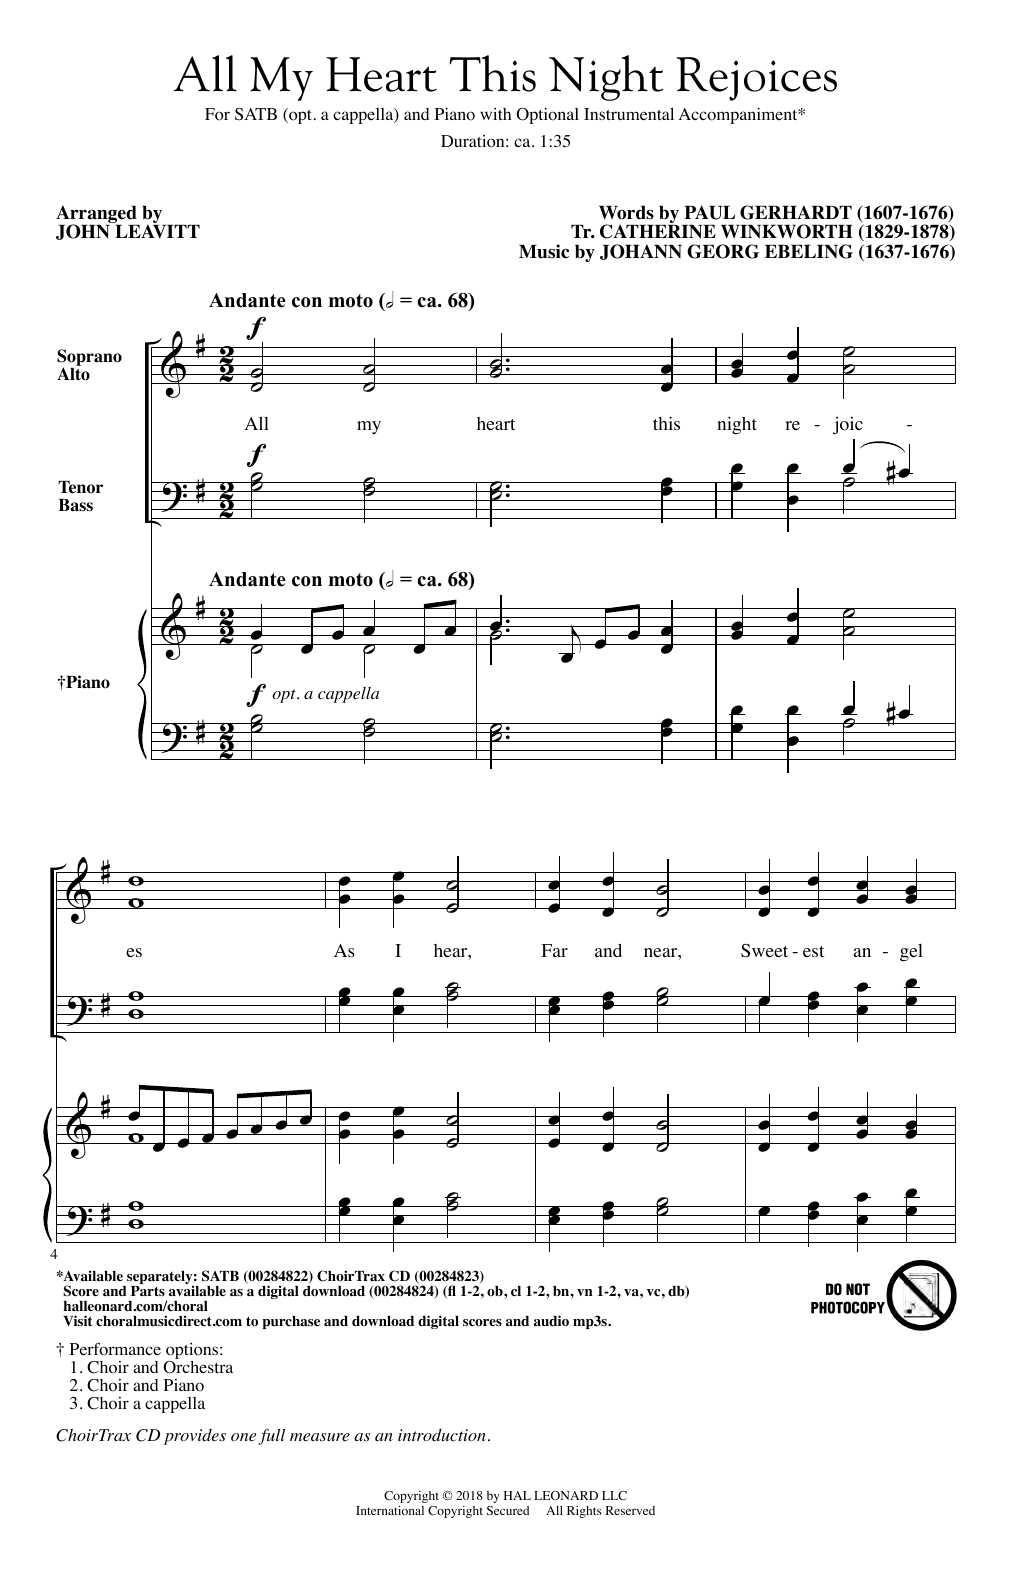 Johann Georg Ebeling All My Heart This Night Rejoices (arr. John Leavitt) Sheet Music Notes & Chords for SATB Choir - Download or Print PDF